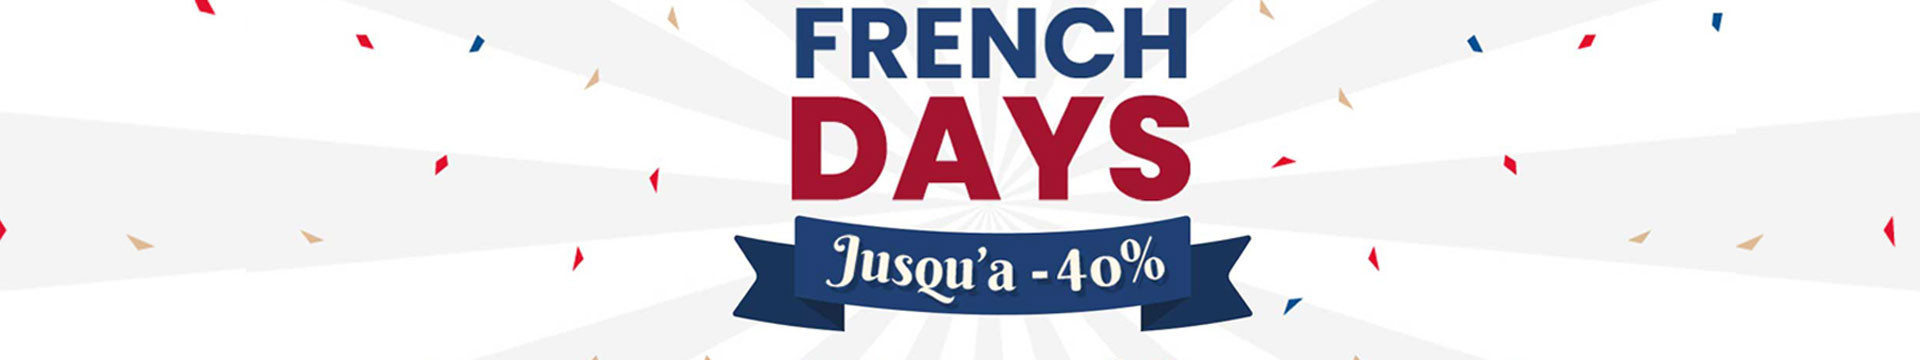 French Days -20%